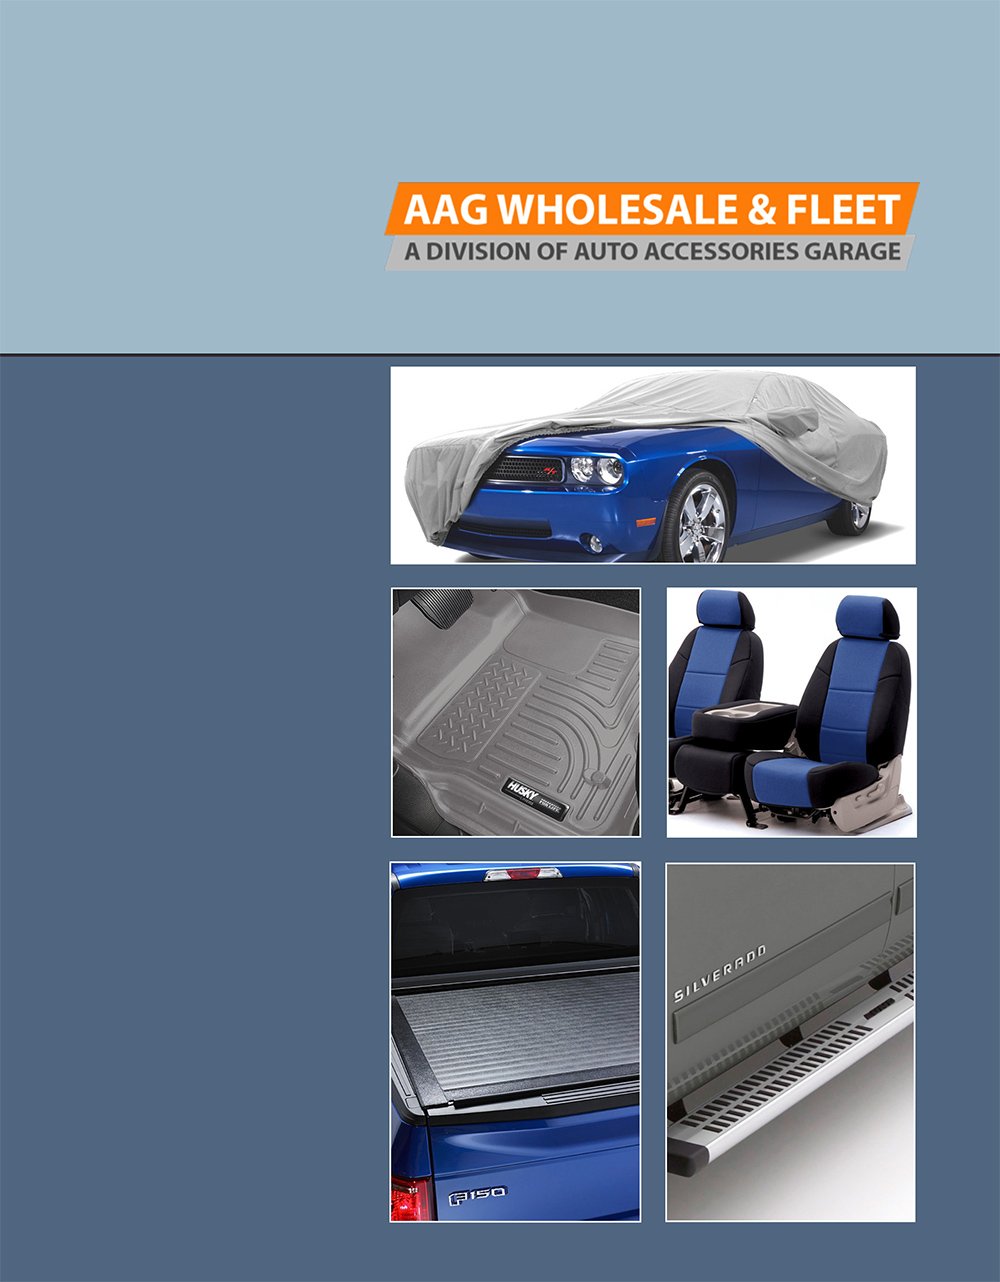 AAG Wholesale & Fleet